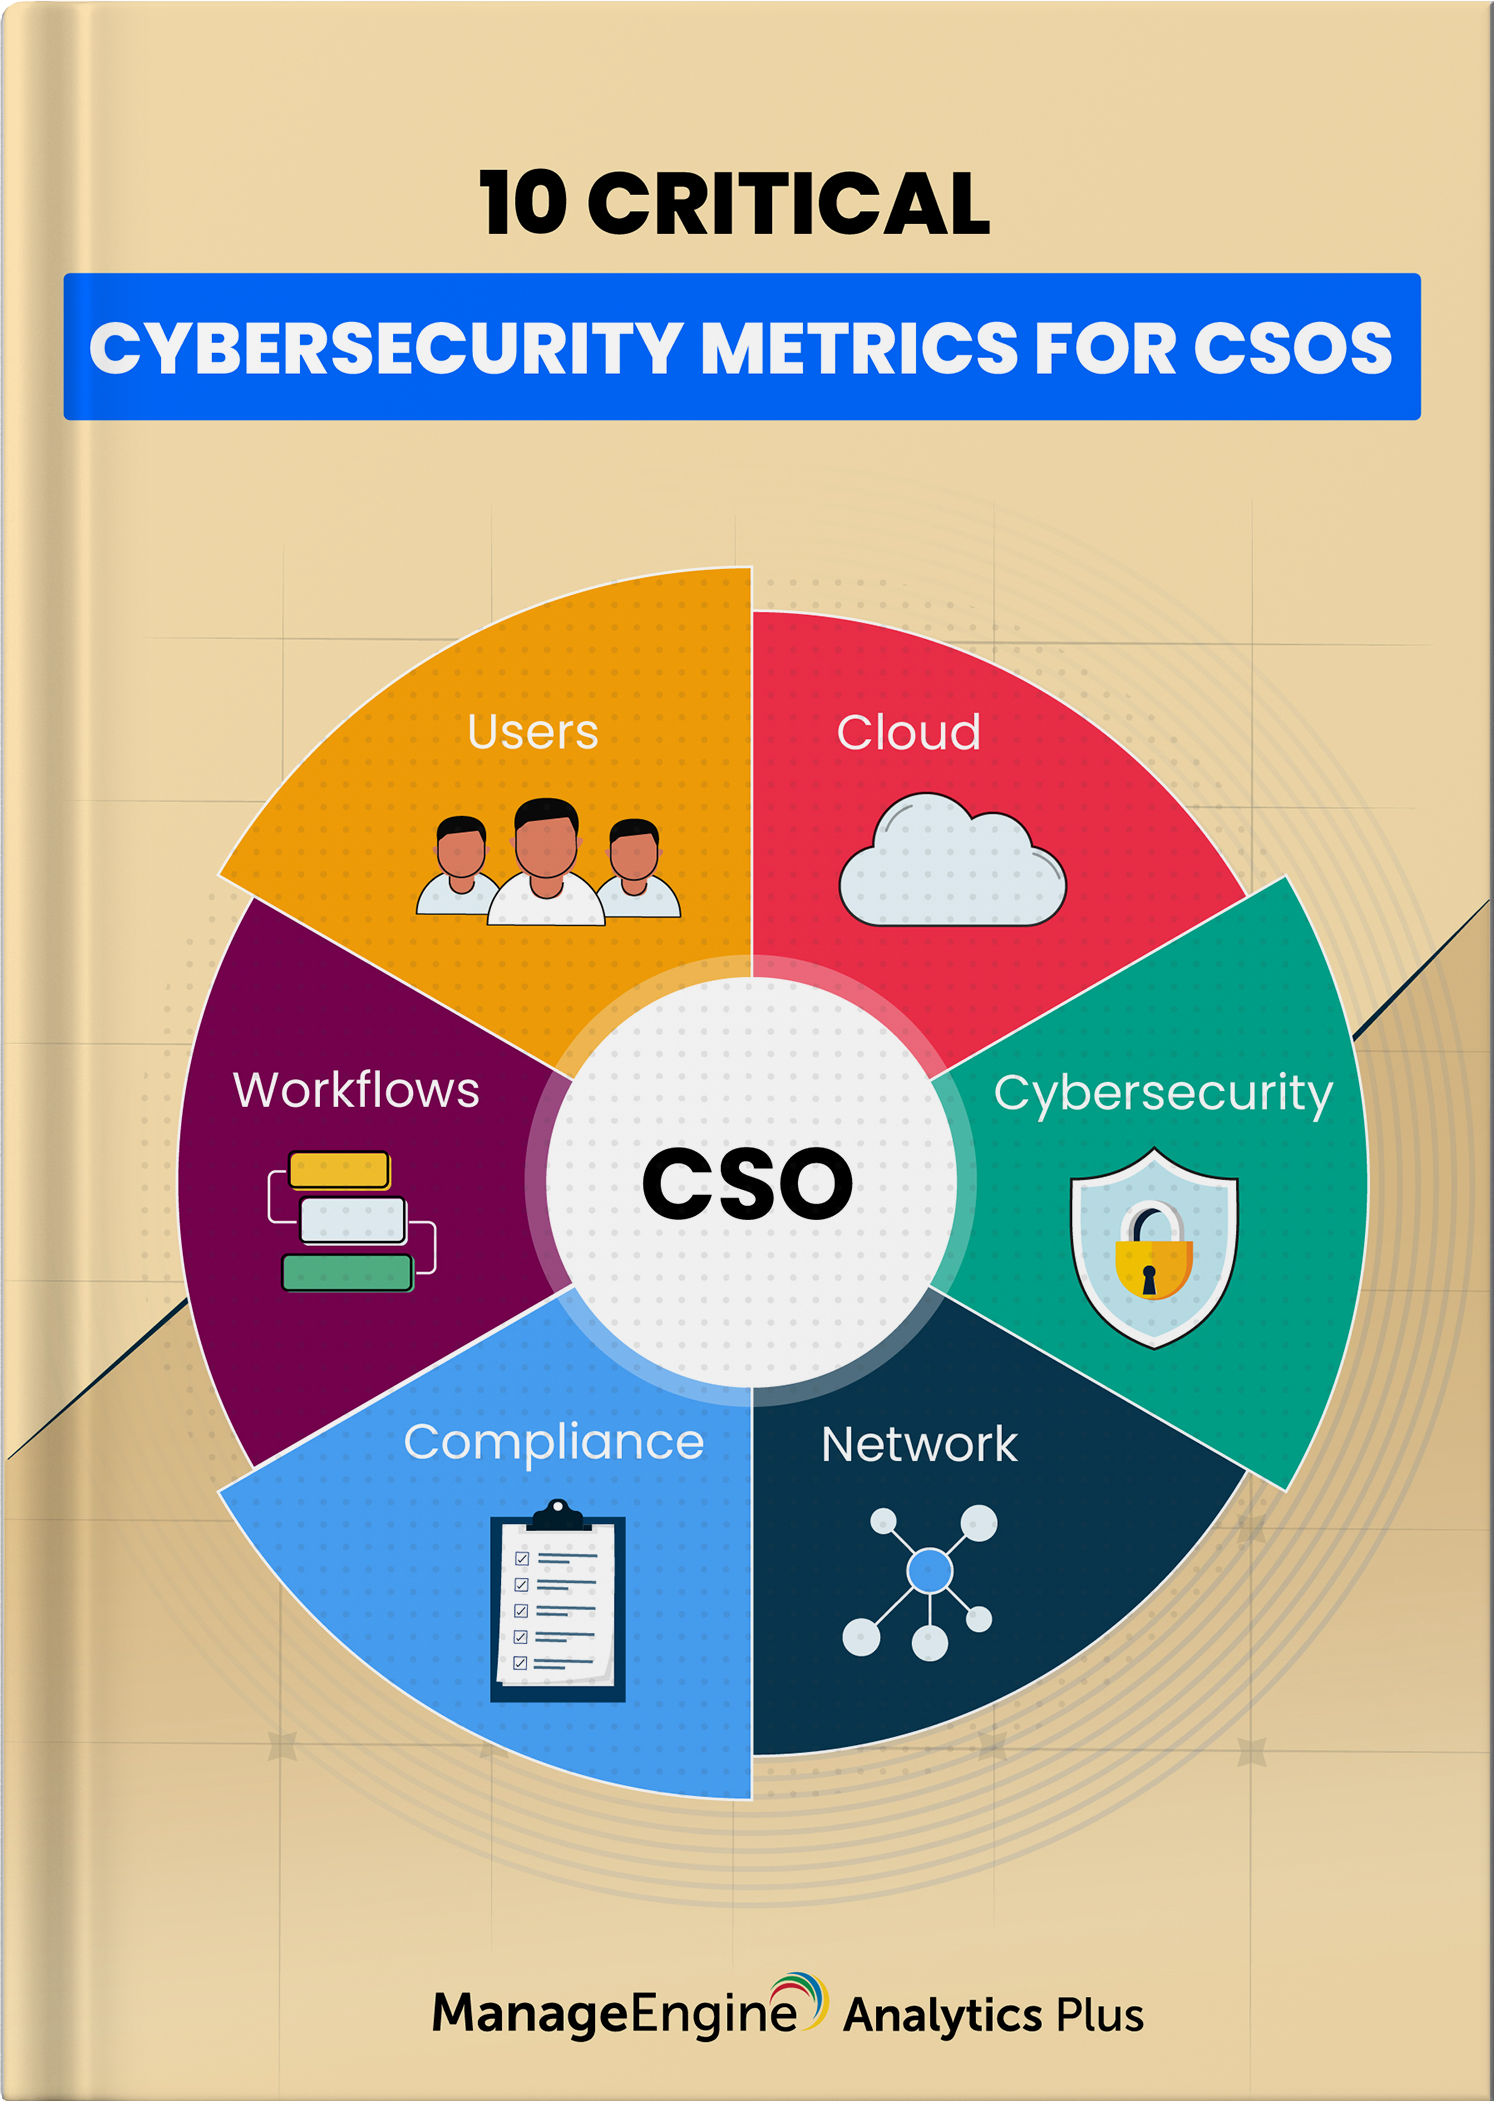 10 metrics CSOs can leverage to build effective cyber defense mechanisms